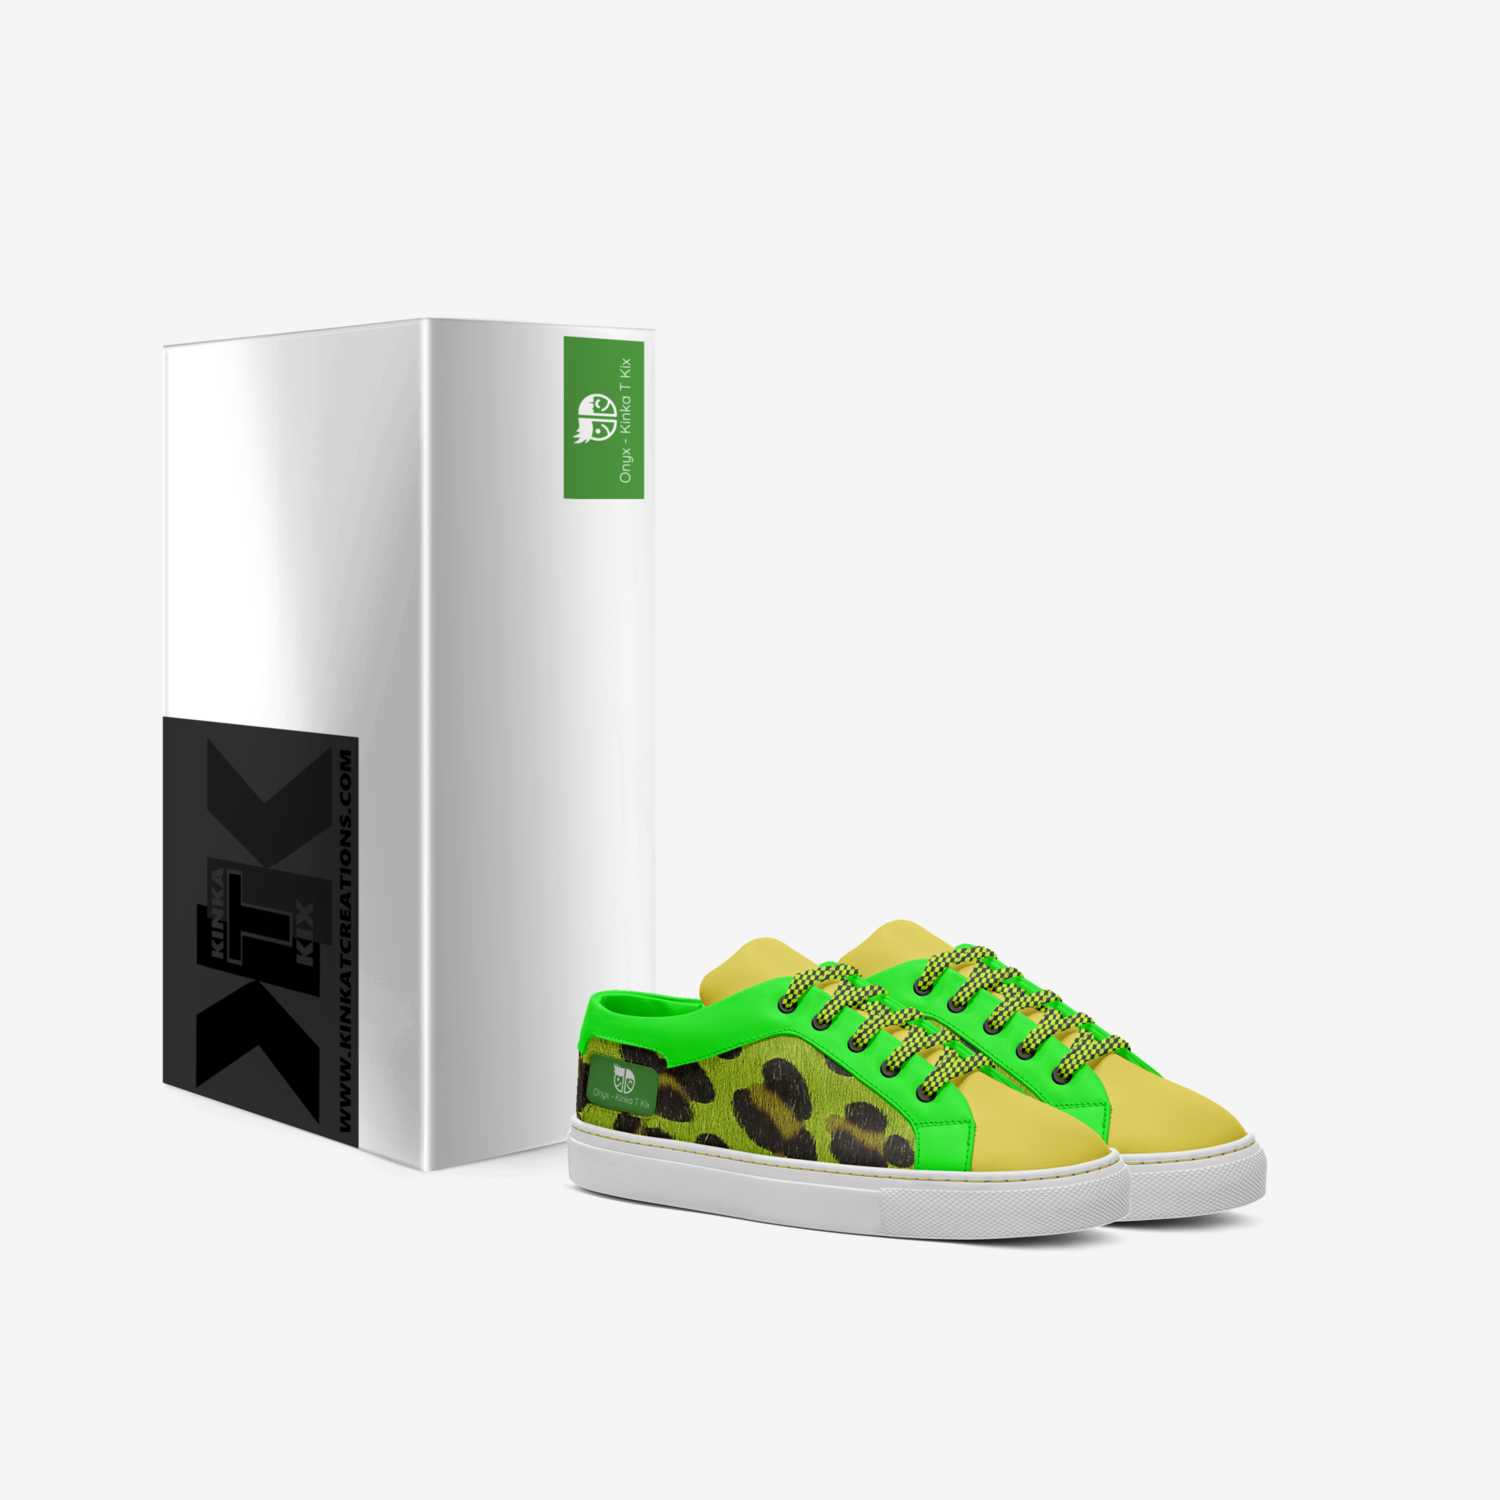 Onyx - Kinka T Kix custom made in Italy shoes by Kinka T Kix | Box view